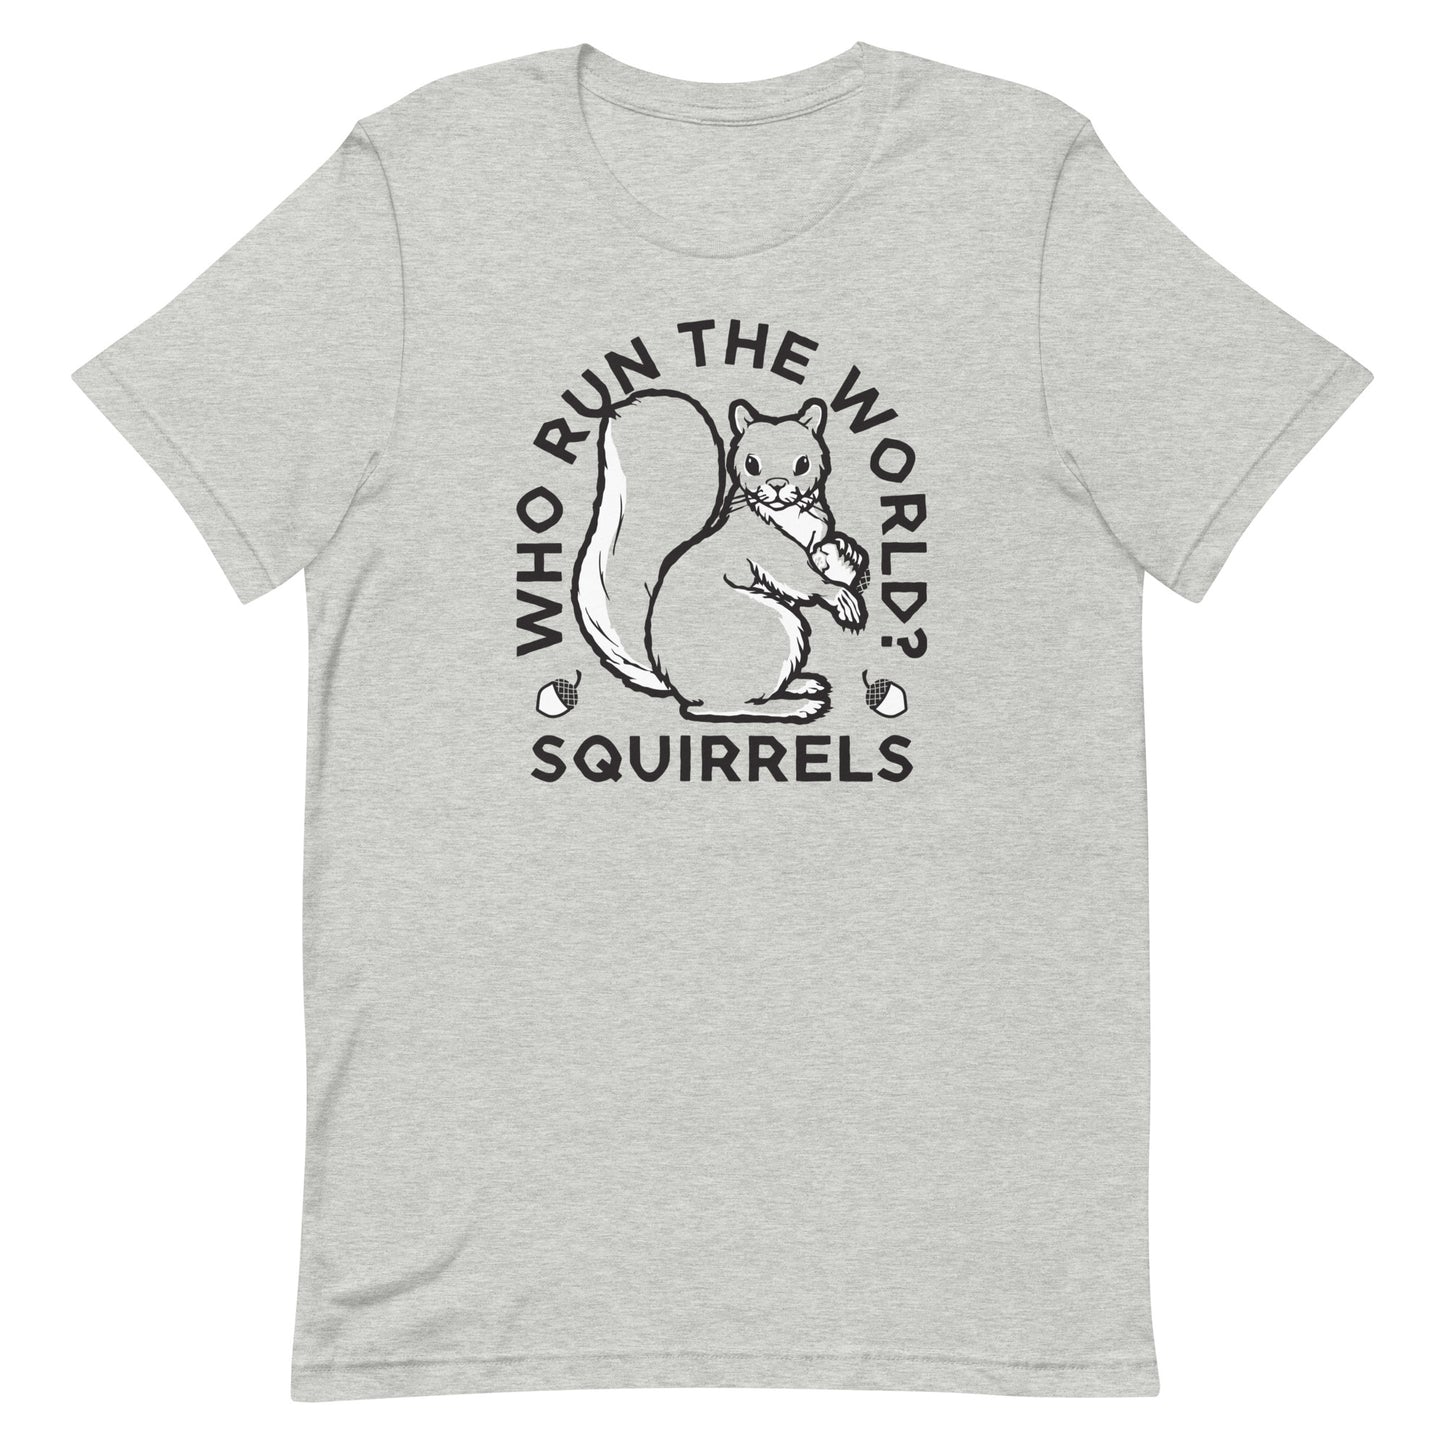 Who Run The World? Squirrels Men's Signature Tee